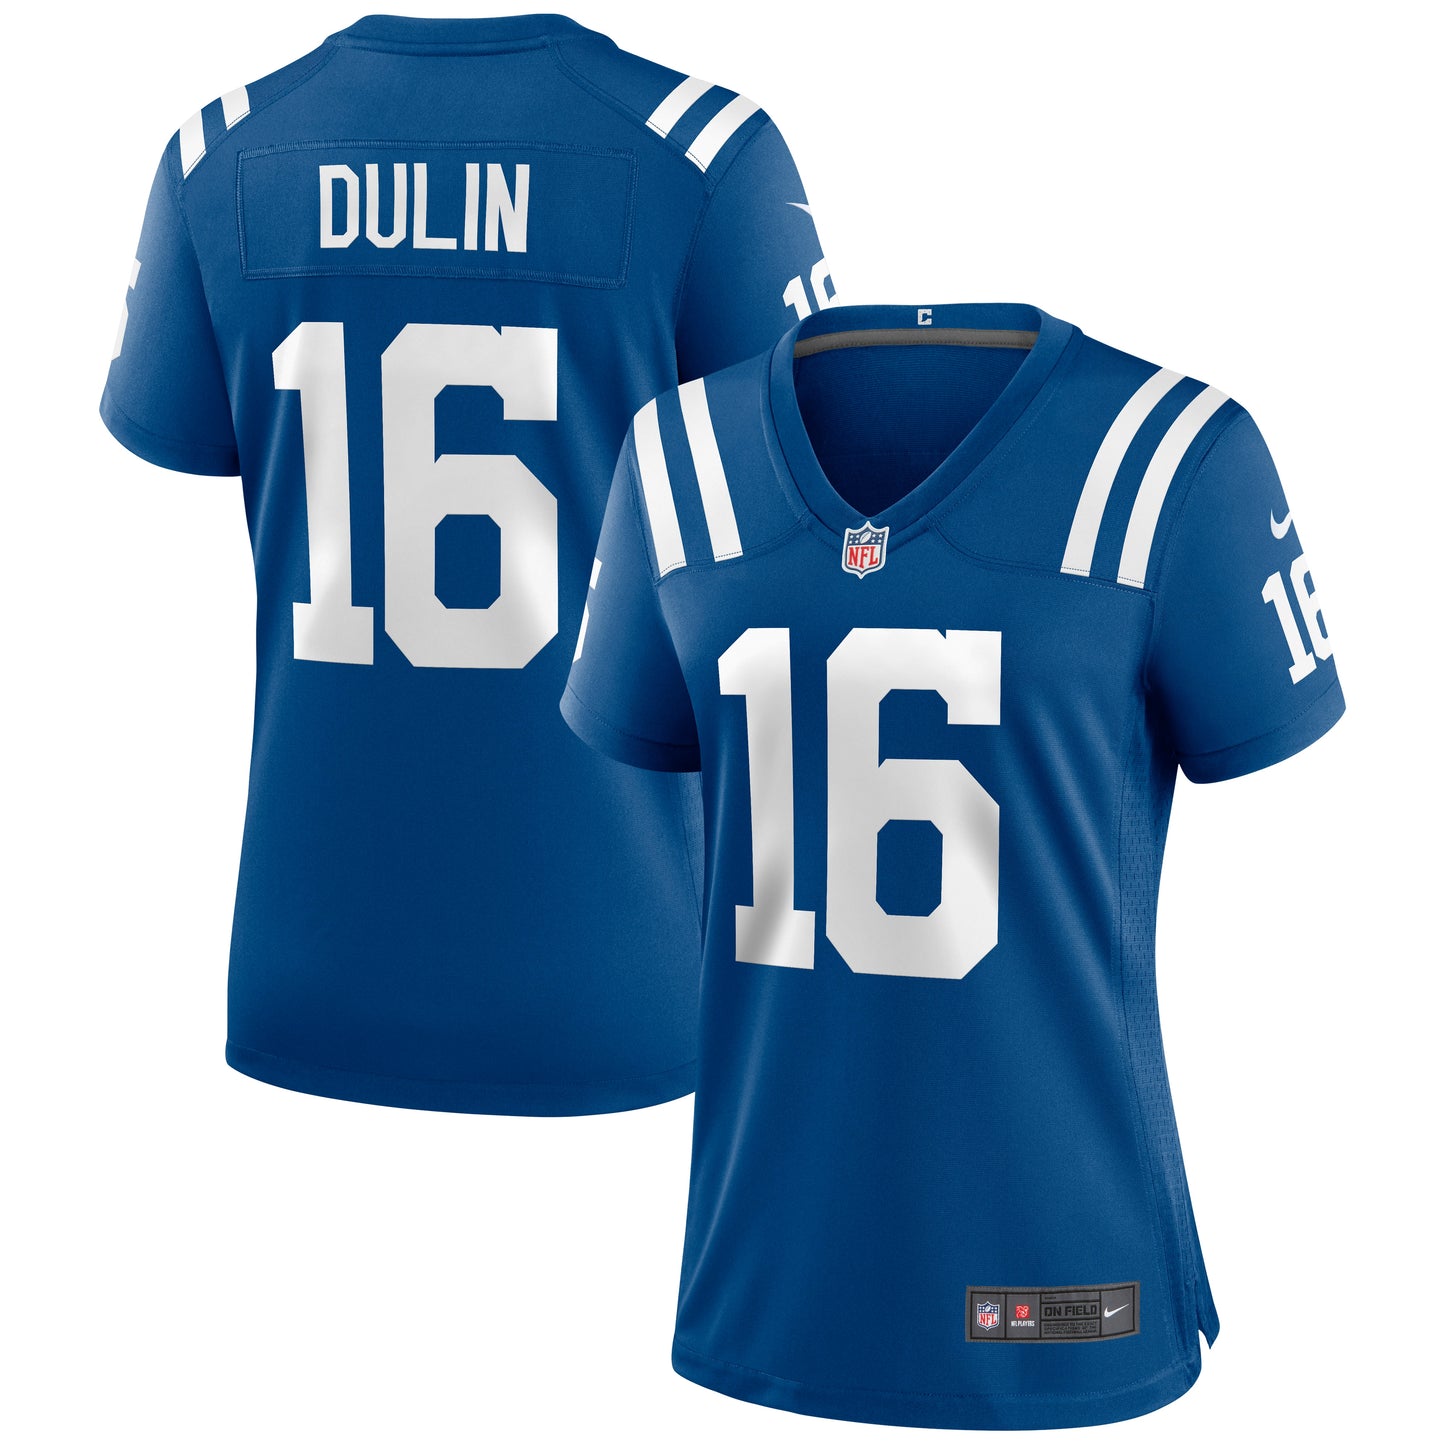 Ashton Dulin Indianapolis Colts Nike Women's Game Jersey - Royal